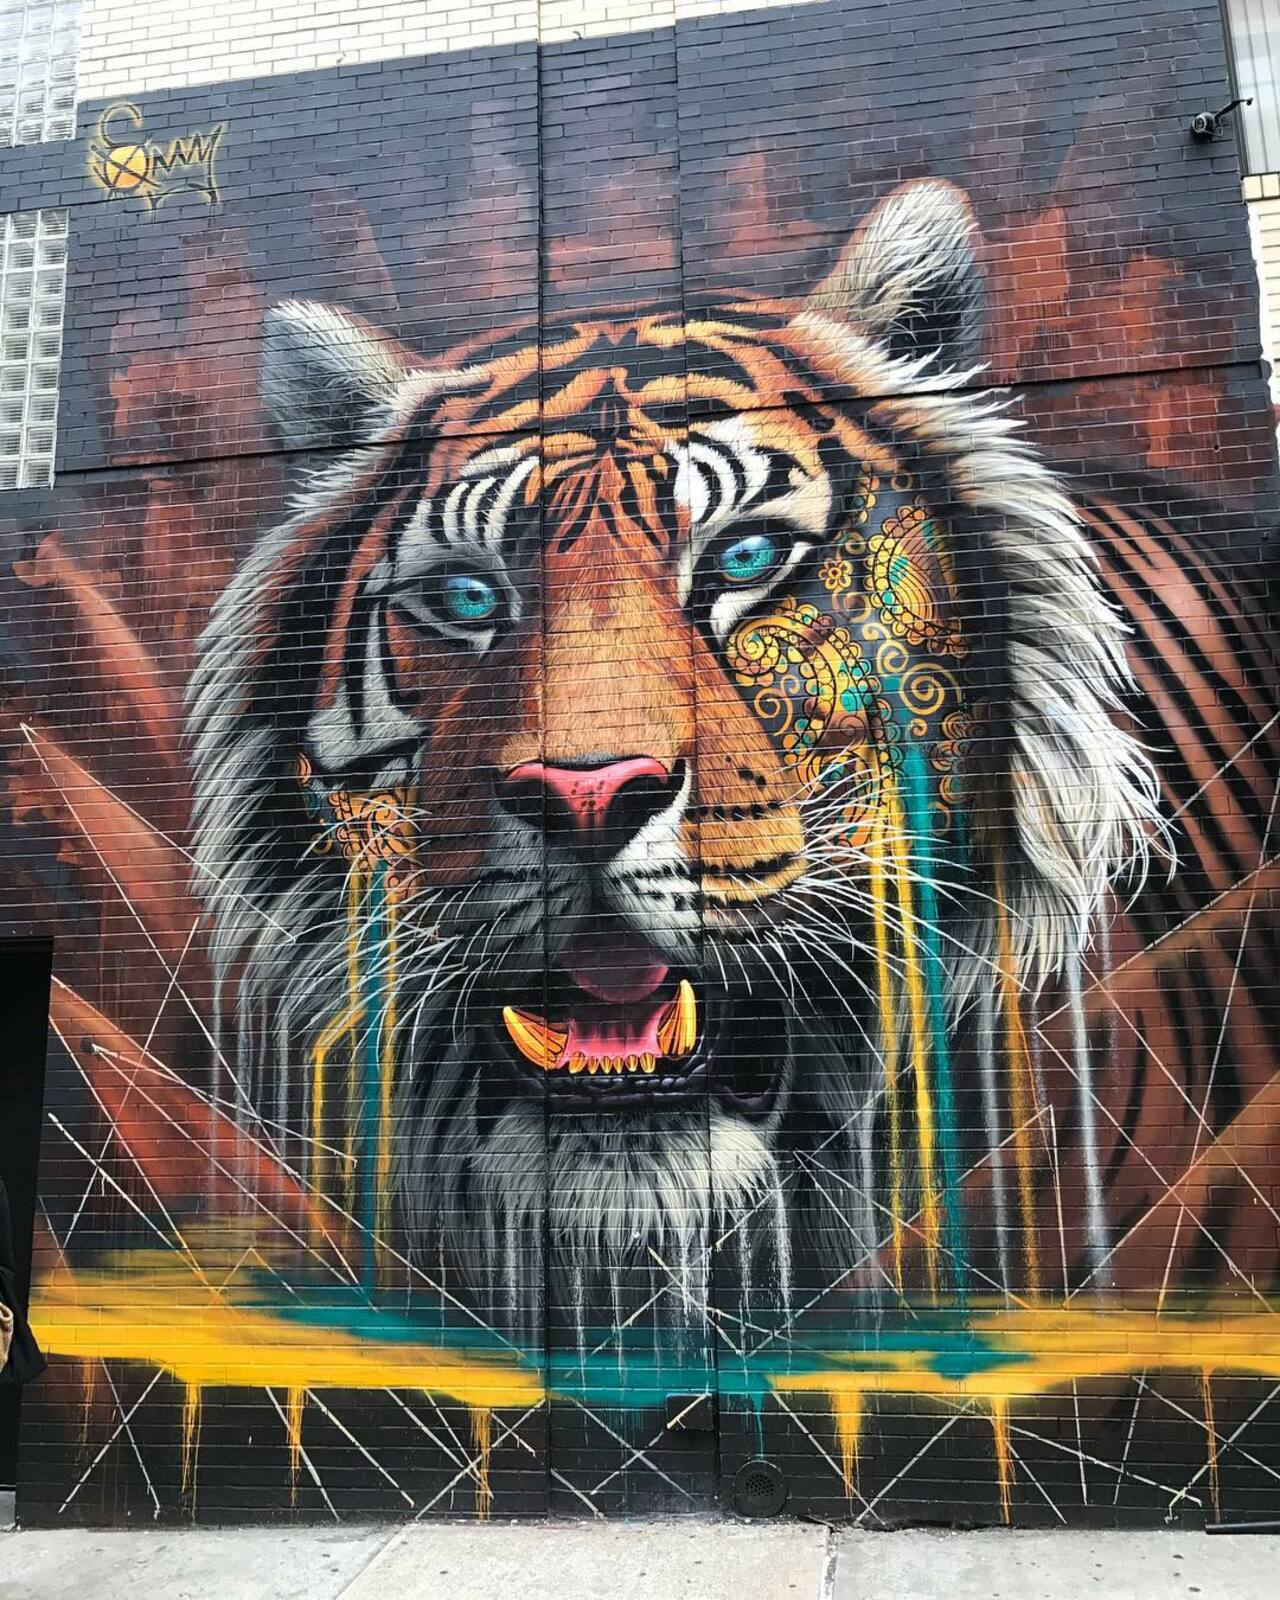 "Project CAT/LISA project NYC" - Mural Art by Sonny Sundancer in New York #art #artists #graffiti #nyc #artlovers #muralart #mural #urbanwalls #urbanart #streetart #streetphotography #wallart #artistsnartlovers https://t.co/dny7NzF9wr